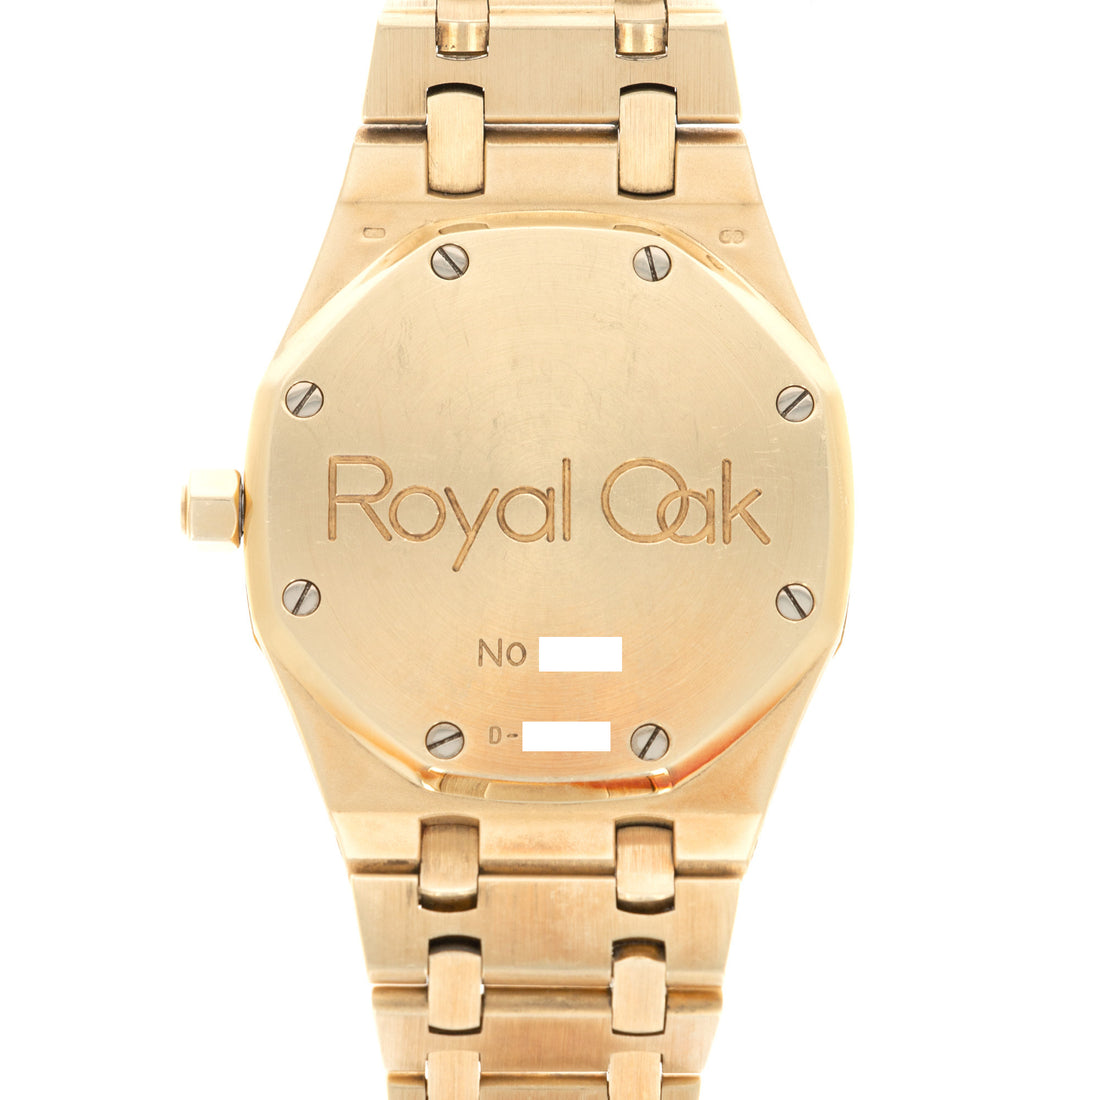 Audemars Piguet Yellow Gold Royal Oak Automatic Watch Ref. 14790